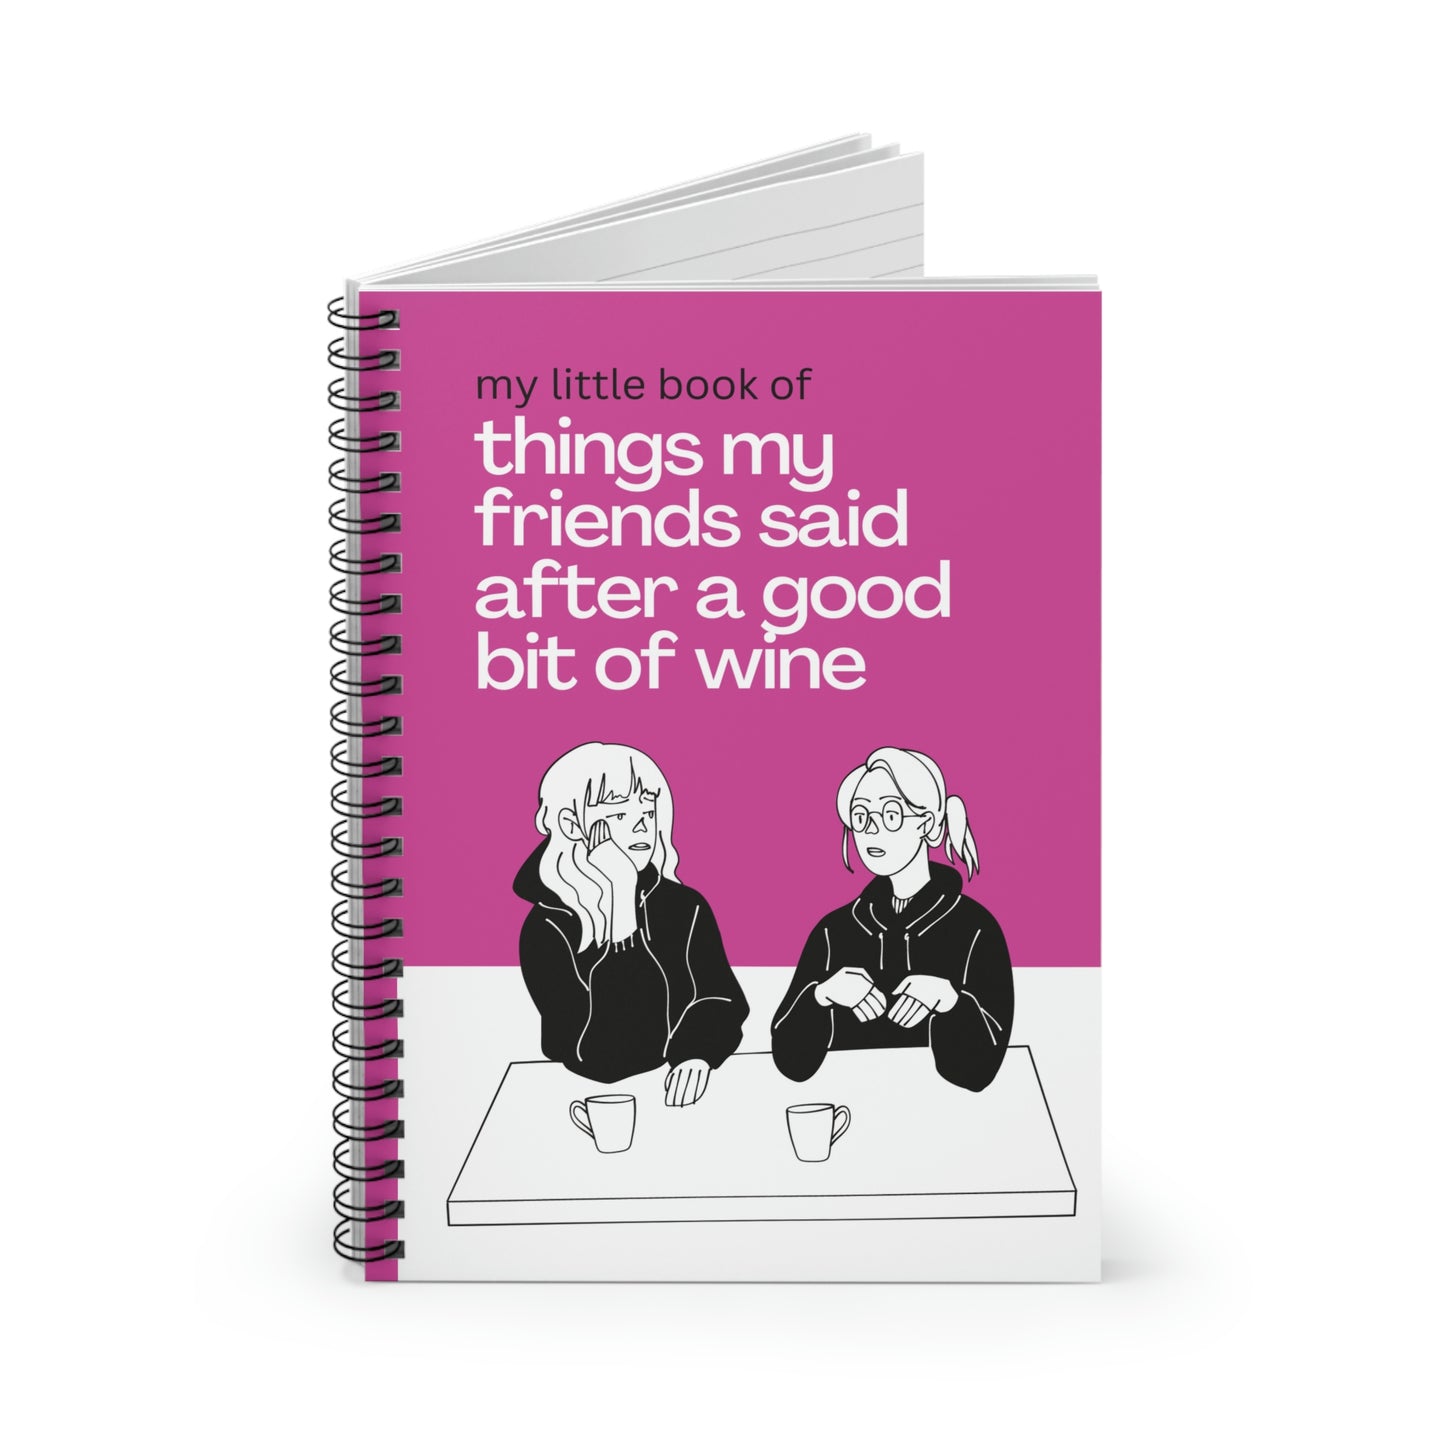 Bit of Wine Spiral Notebook - Ruled Line